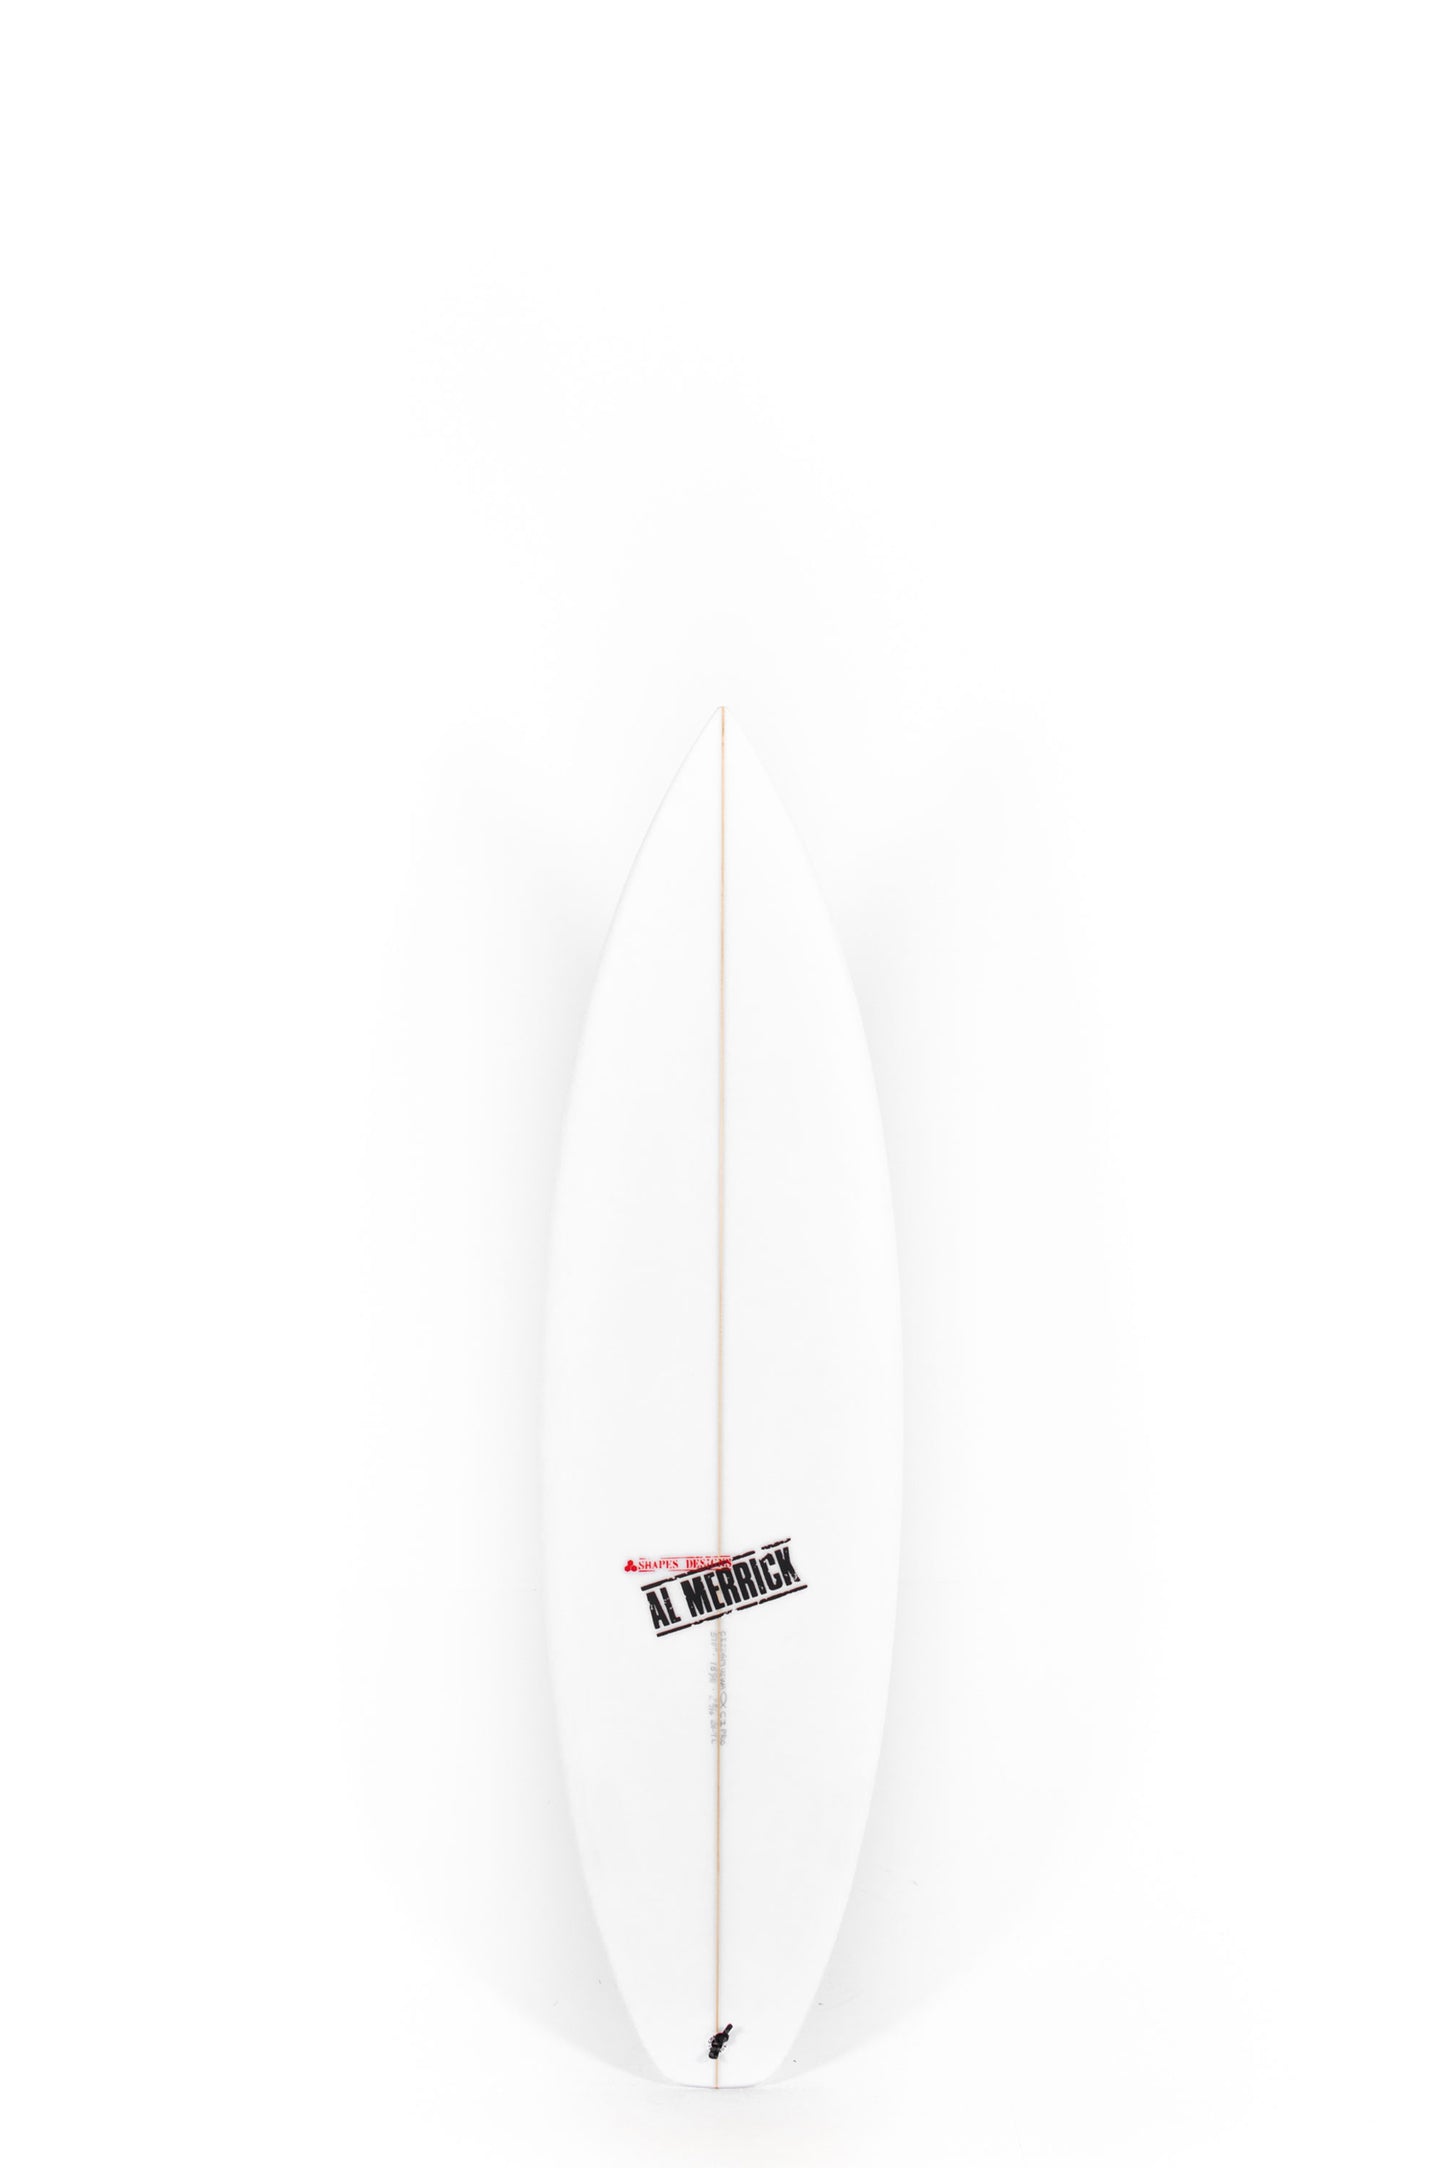 
                  
                    Pukas Surf Shop - Channel Islands - CI PRO by Britt Merrick - 5'10" x 18 5/8 x 2 5/16 - 26.9L - CI22619
                  
                